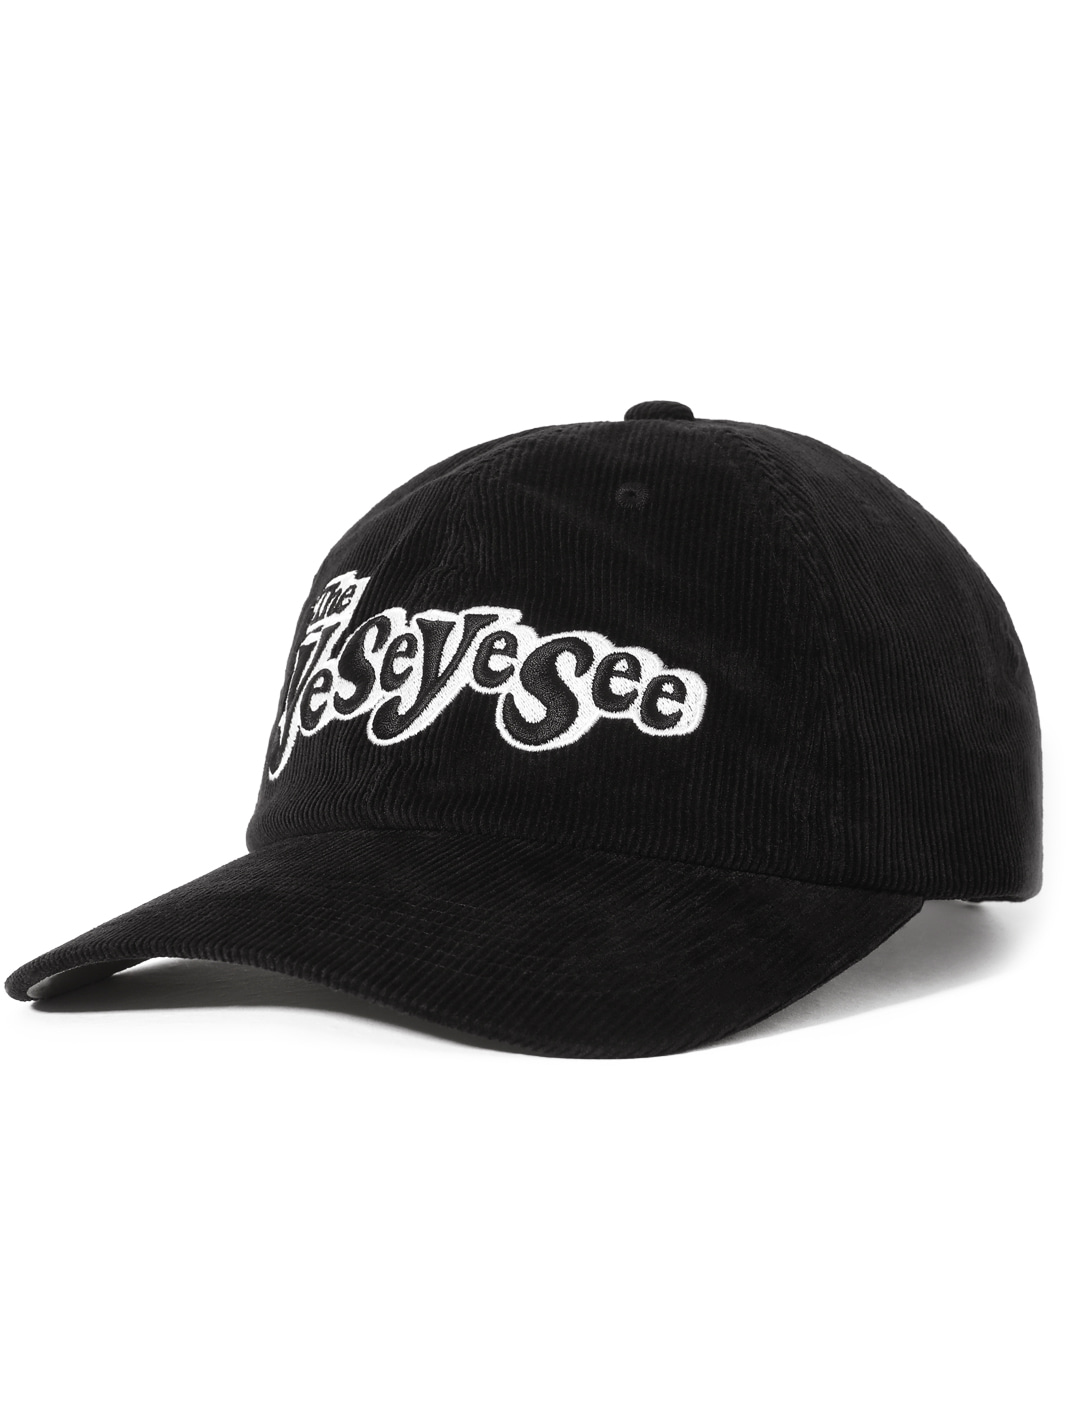 The Yeseyesee Cap Black